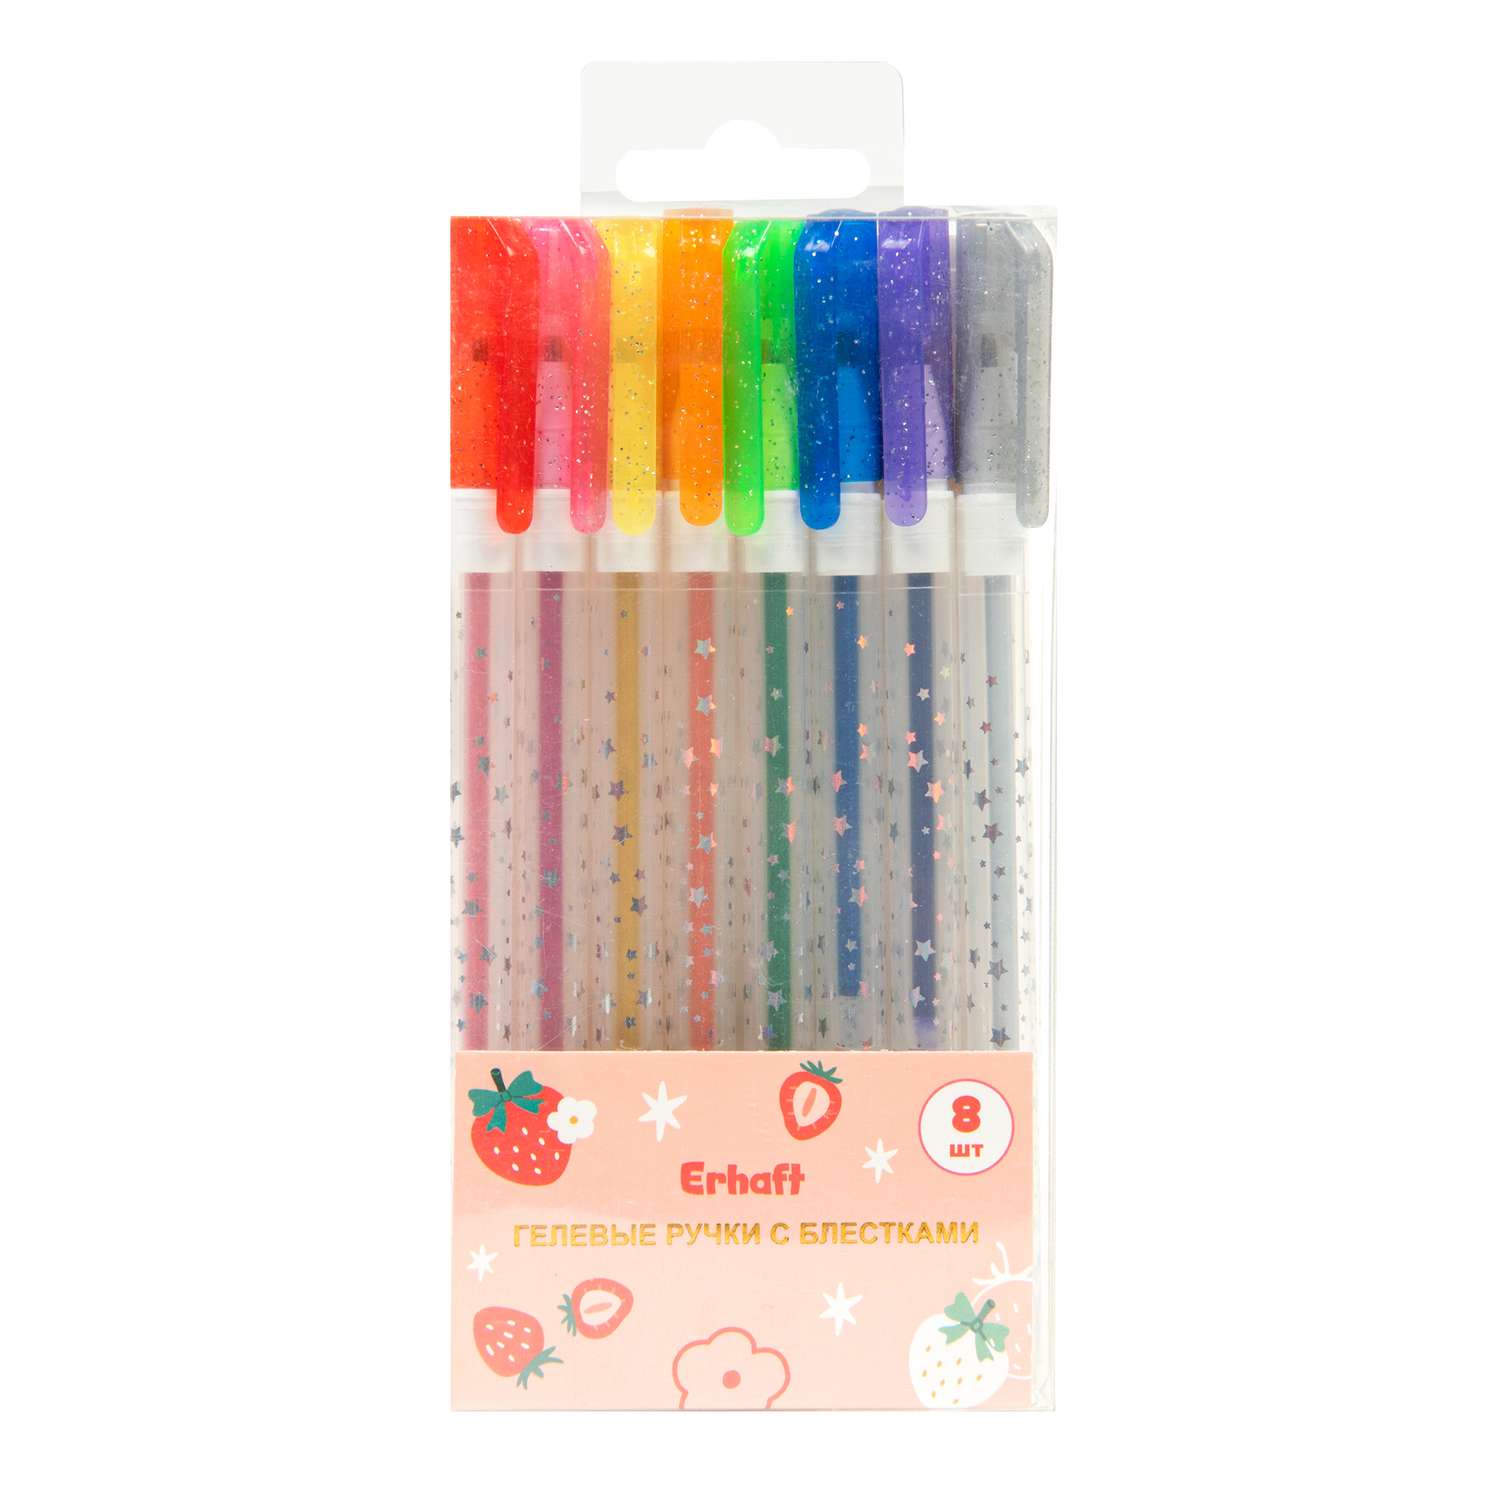 Ручка гелевая Erhaft Strawberry с блестками 8цветов - фото 1